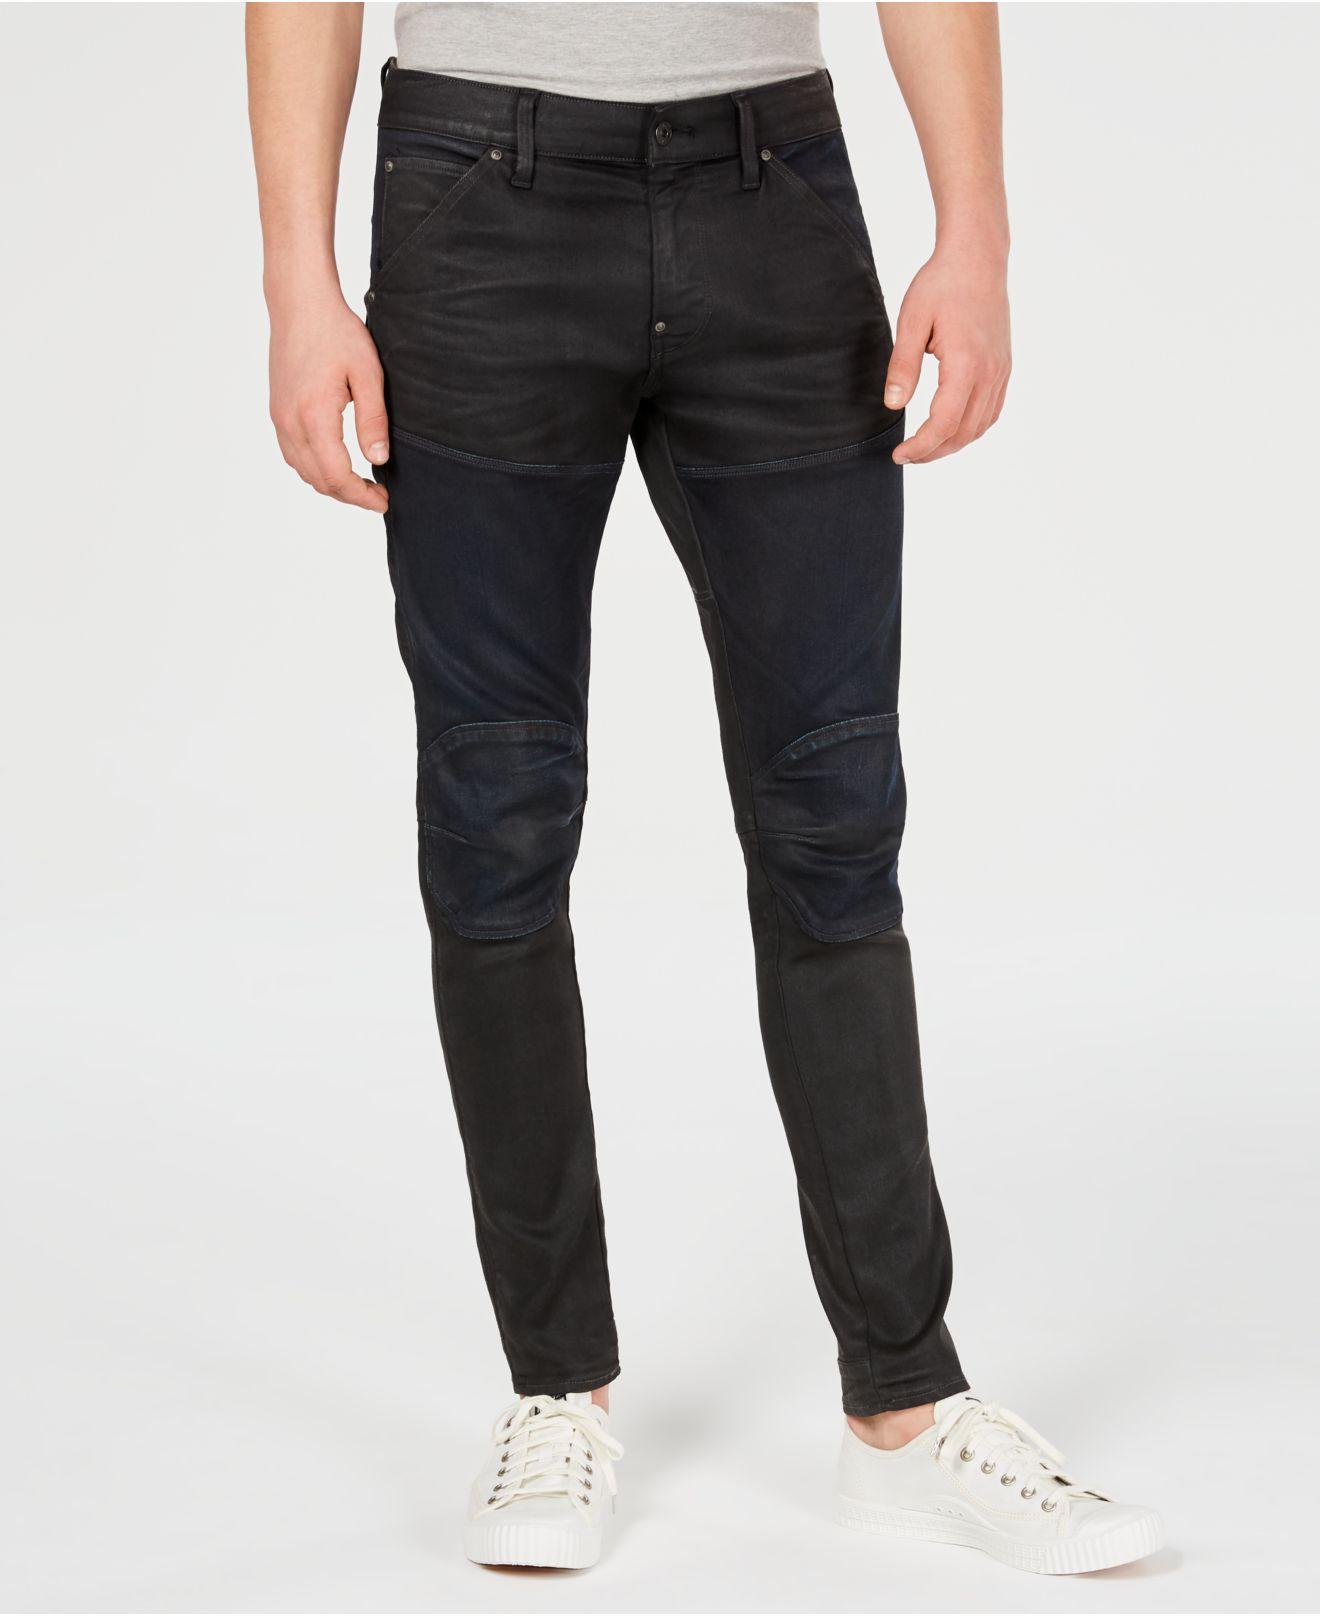 Lyst - G-Star RAW 5620 Elwood 3d Skinny-fit Stretch Jeans in Black for Men